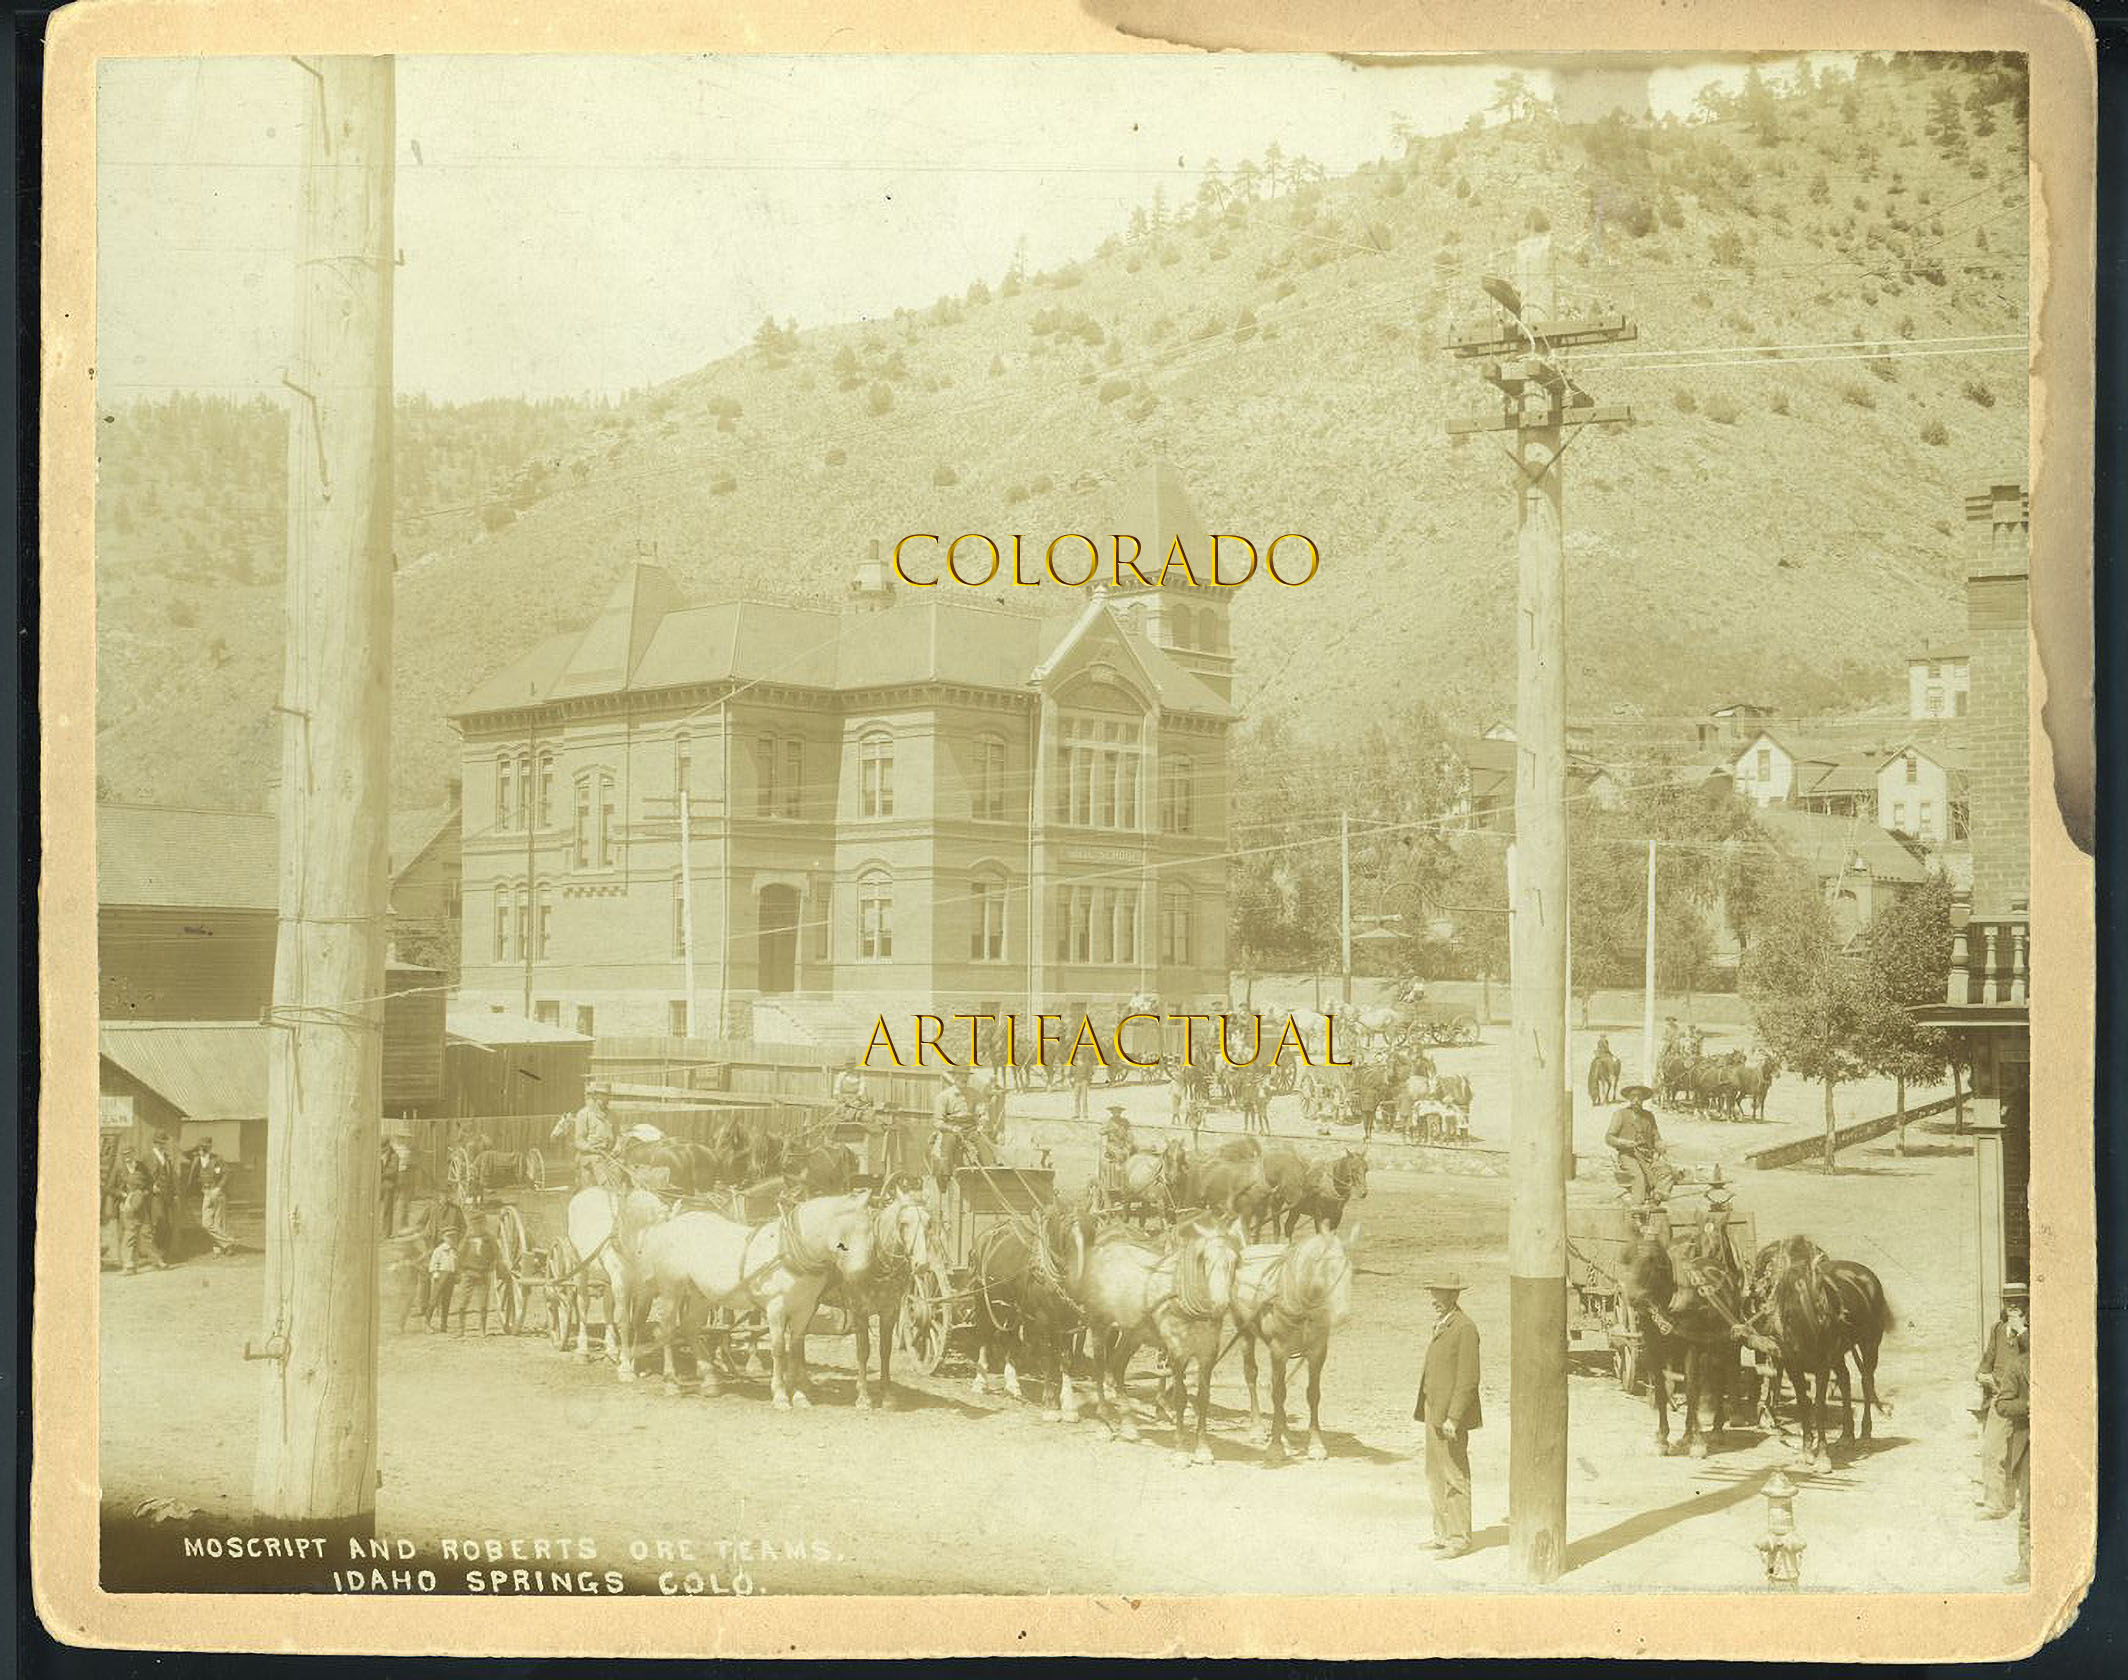 MOSCRIPT & ROBERTS ORE TEAMS IDAHO SPRINGS COLORADO Lachlan McLean photograph 1885